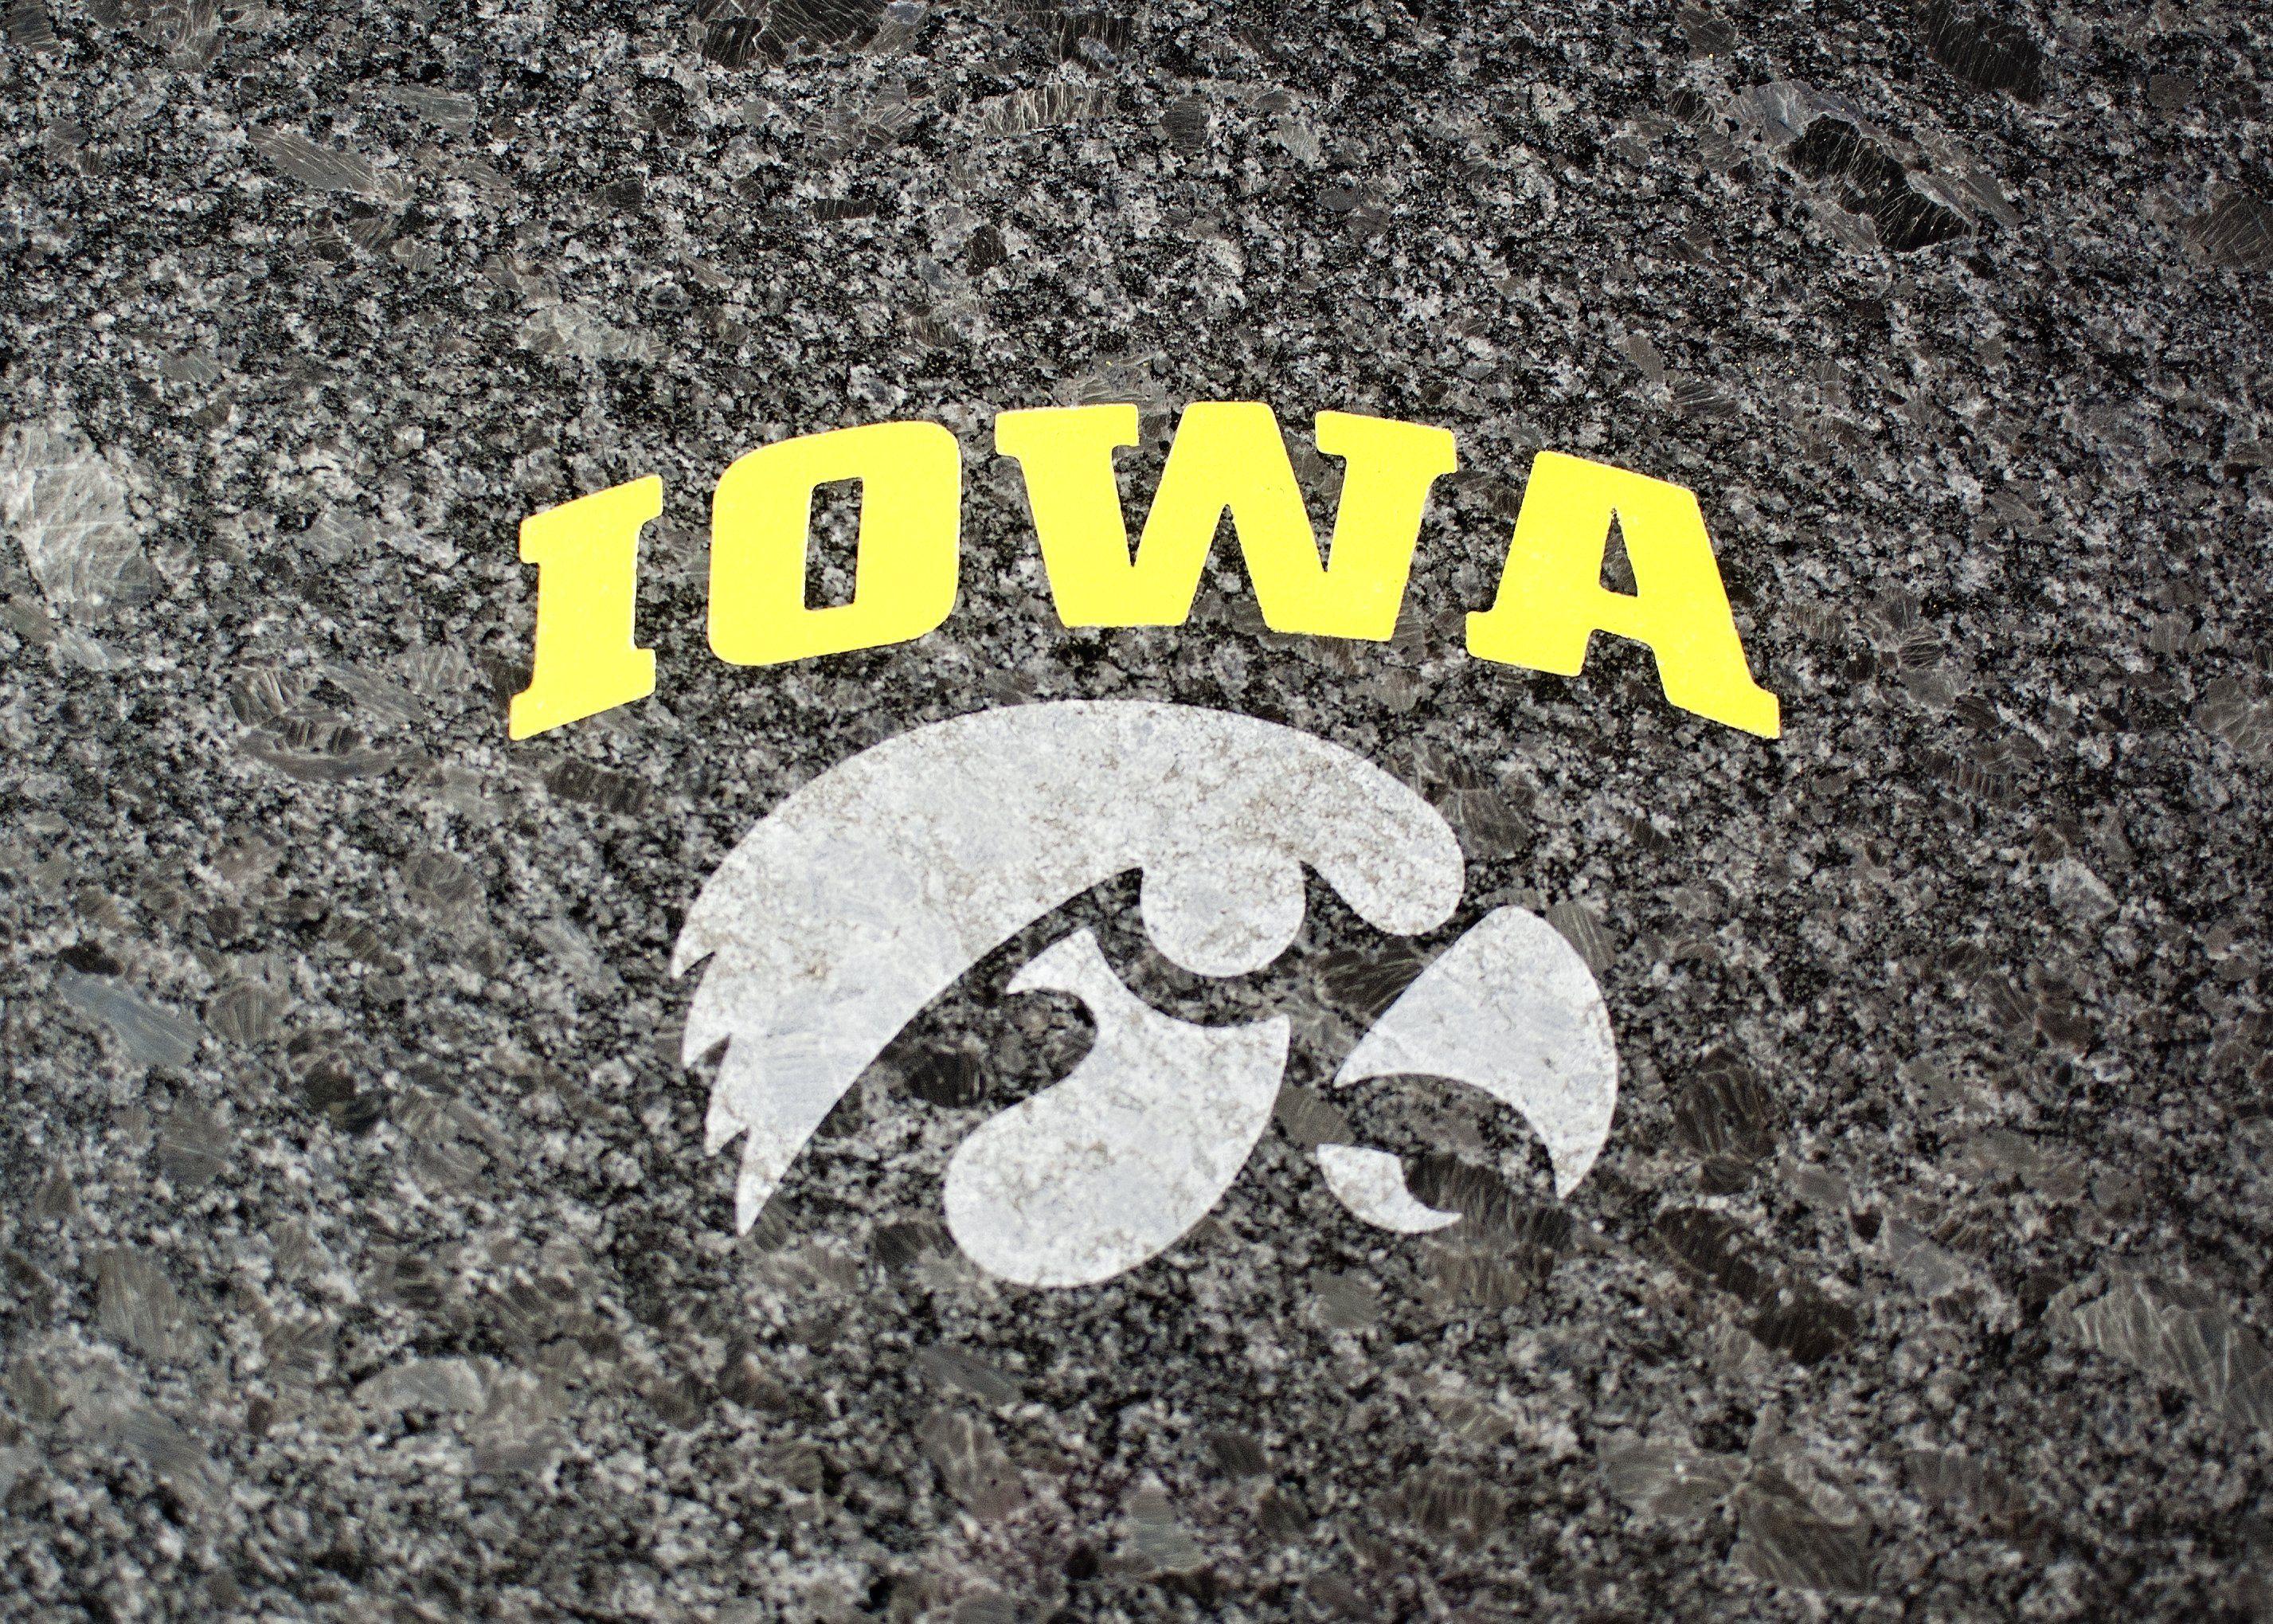 Iowa Hawkeyes iPhone Wallpaper